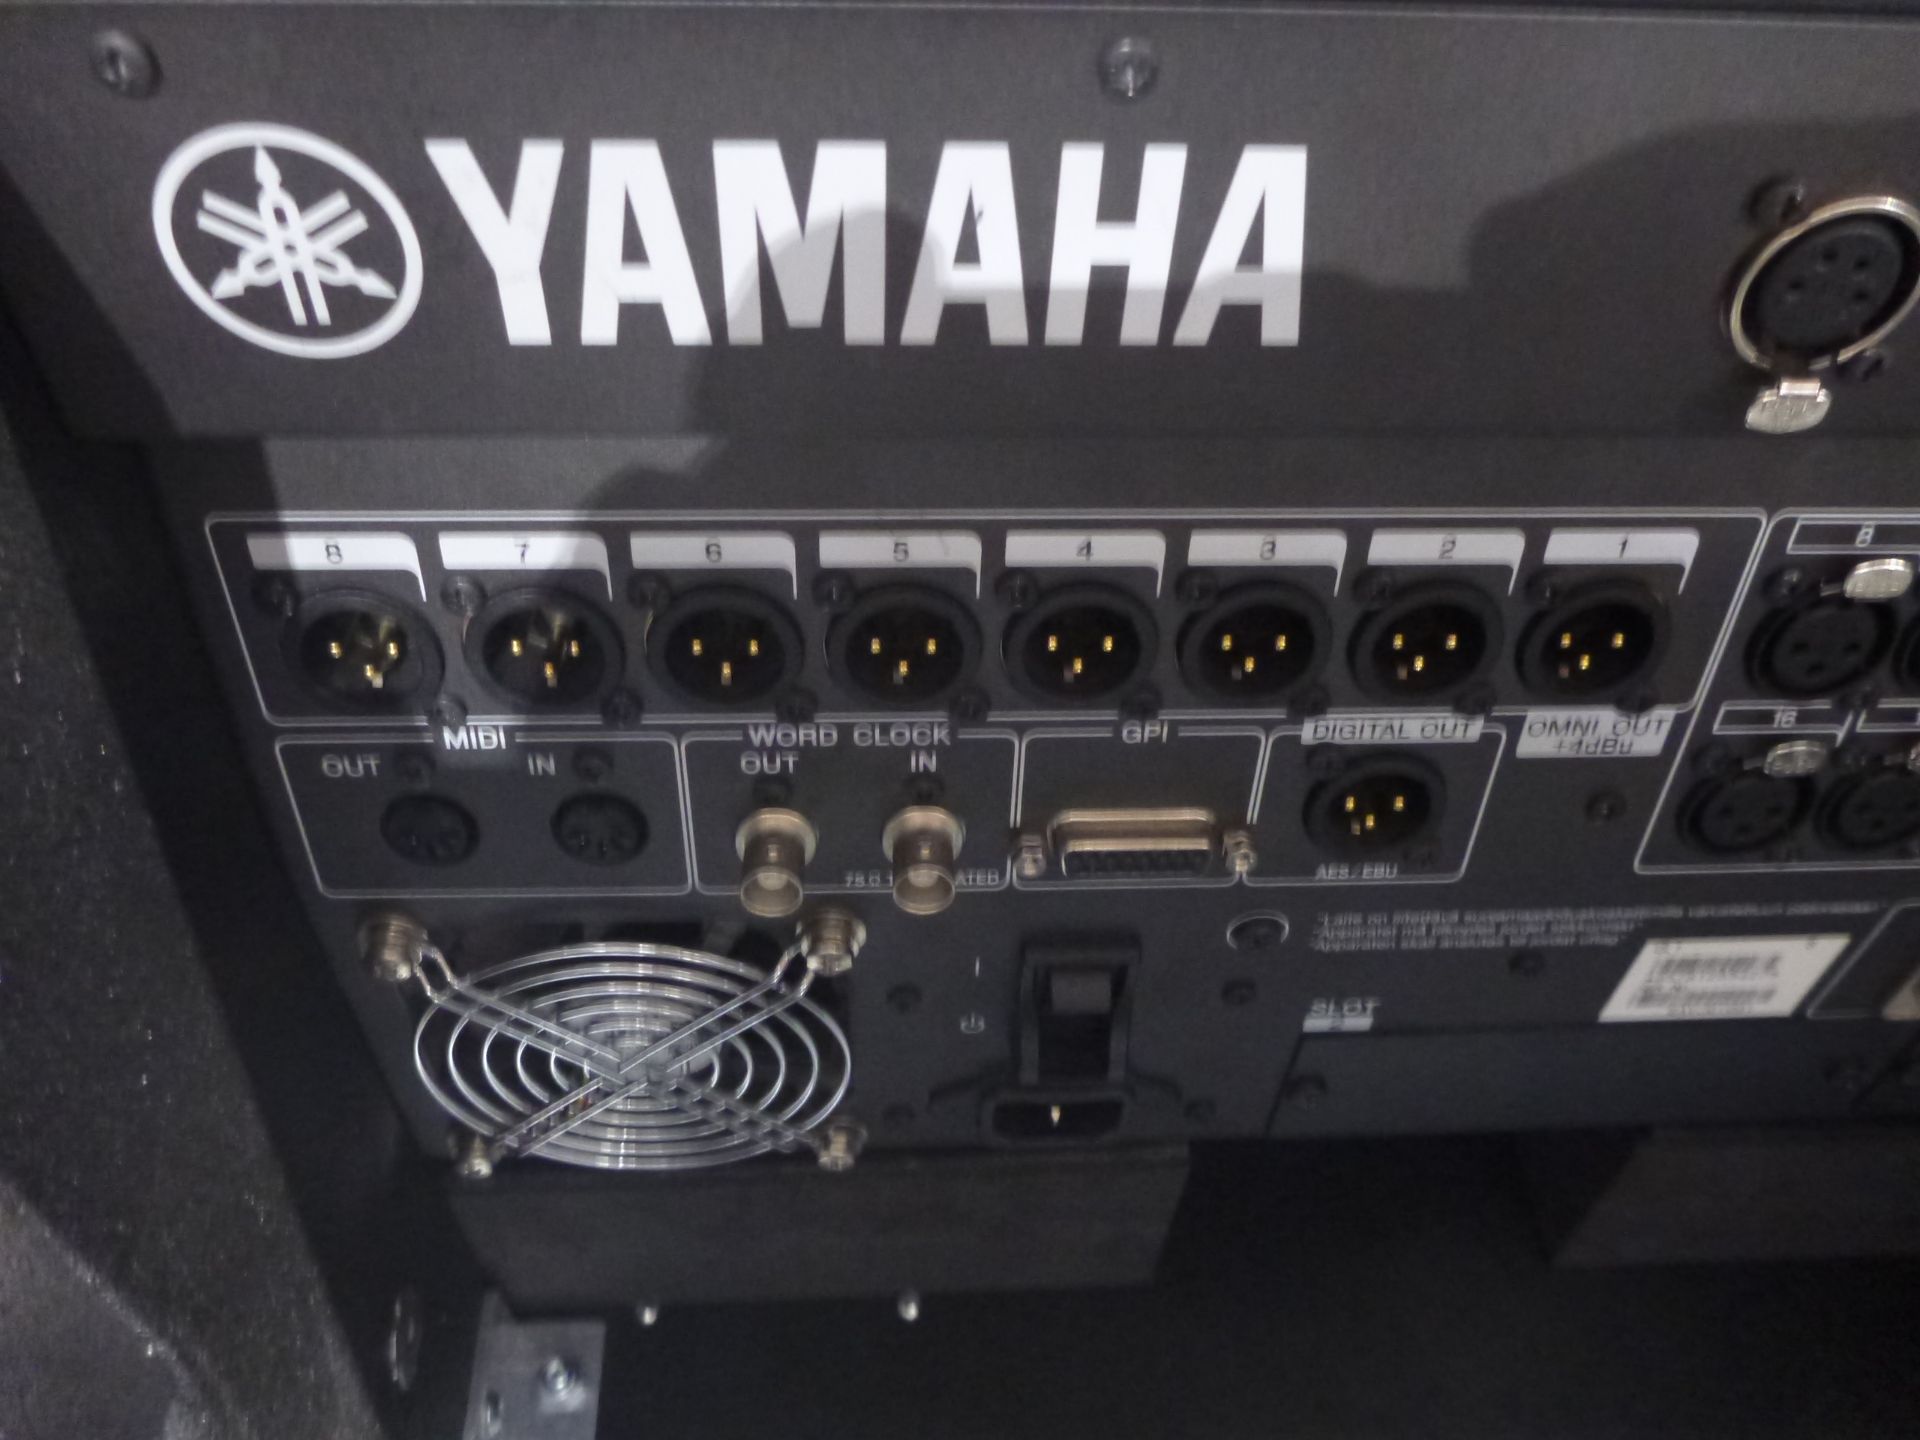 Yamaha QL1 32 Channel Digital Audio Mixing Desk, S/N C121BAVJ01001, In flight case - Image 5 of 8